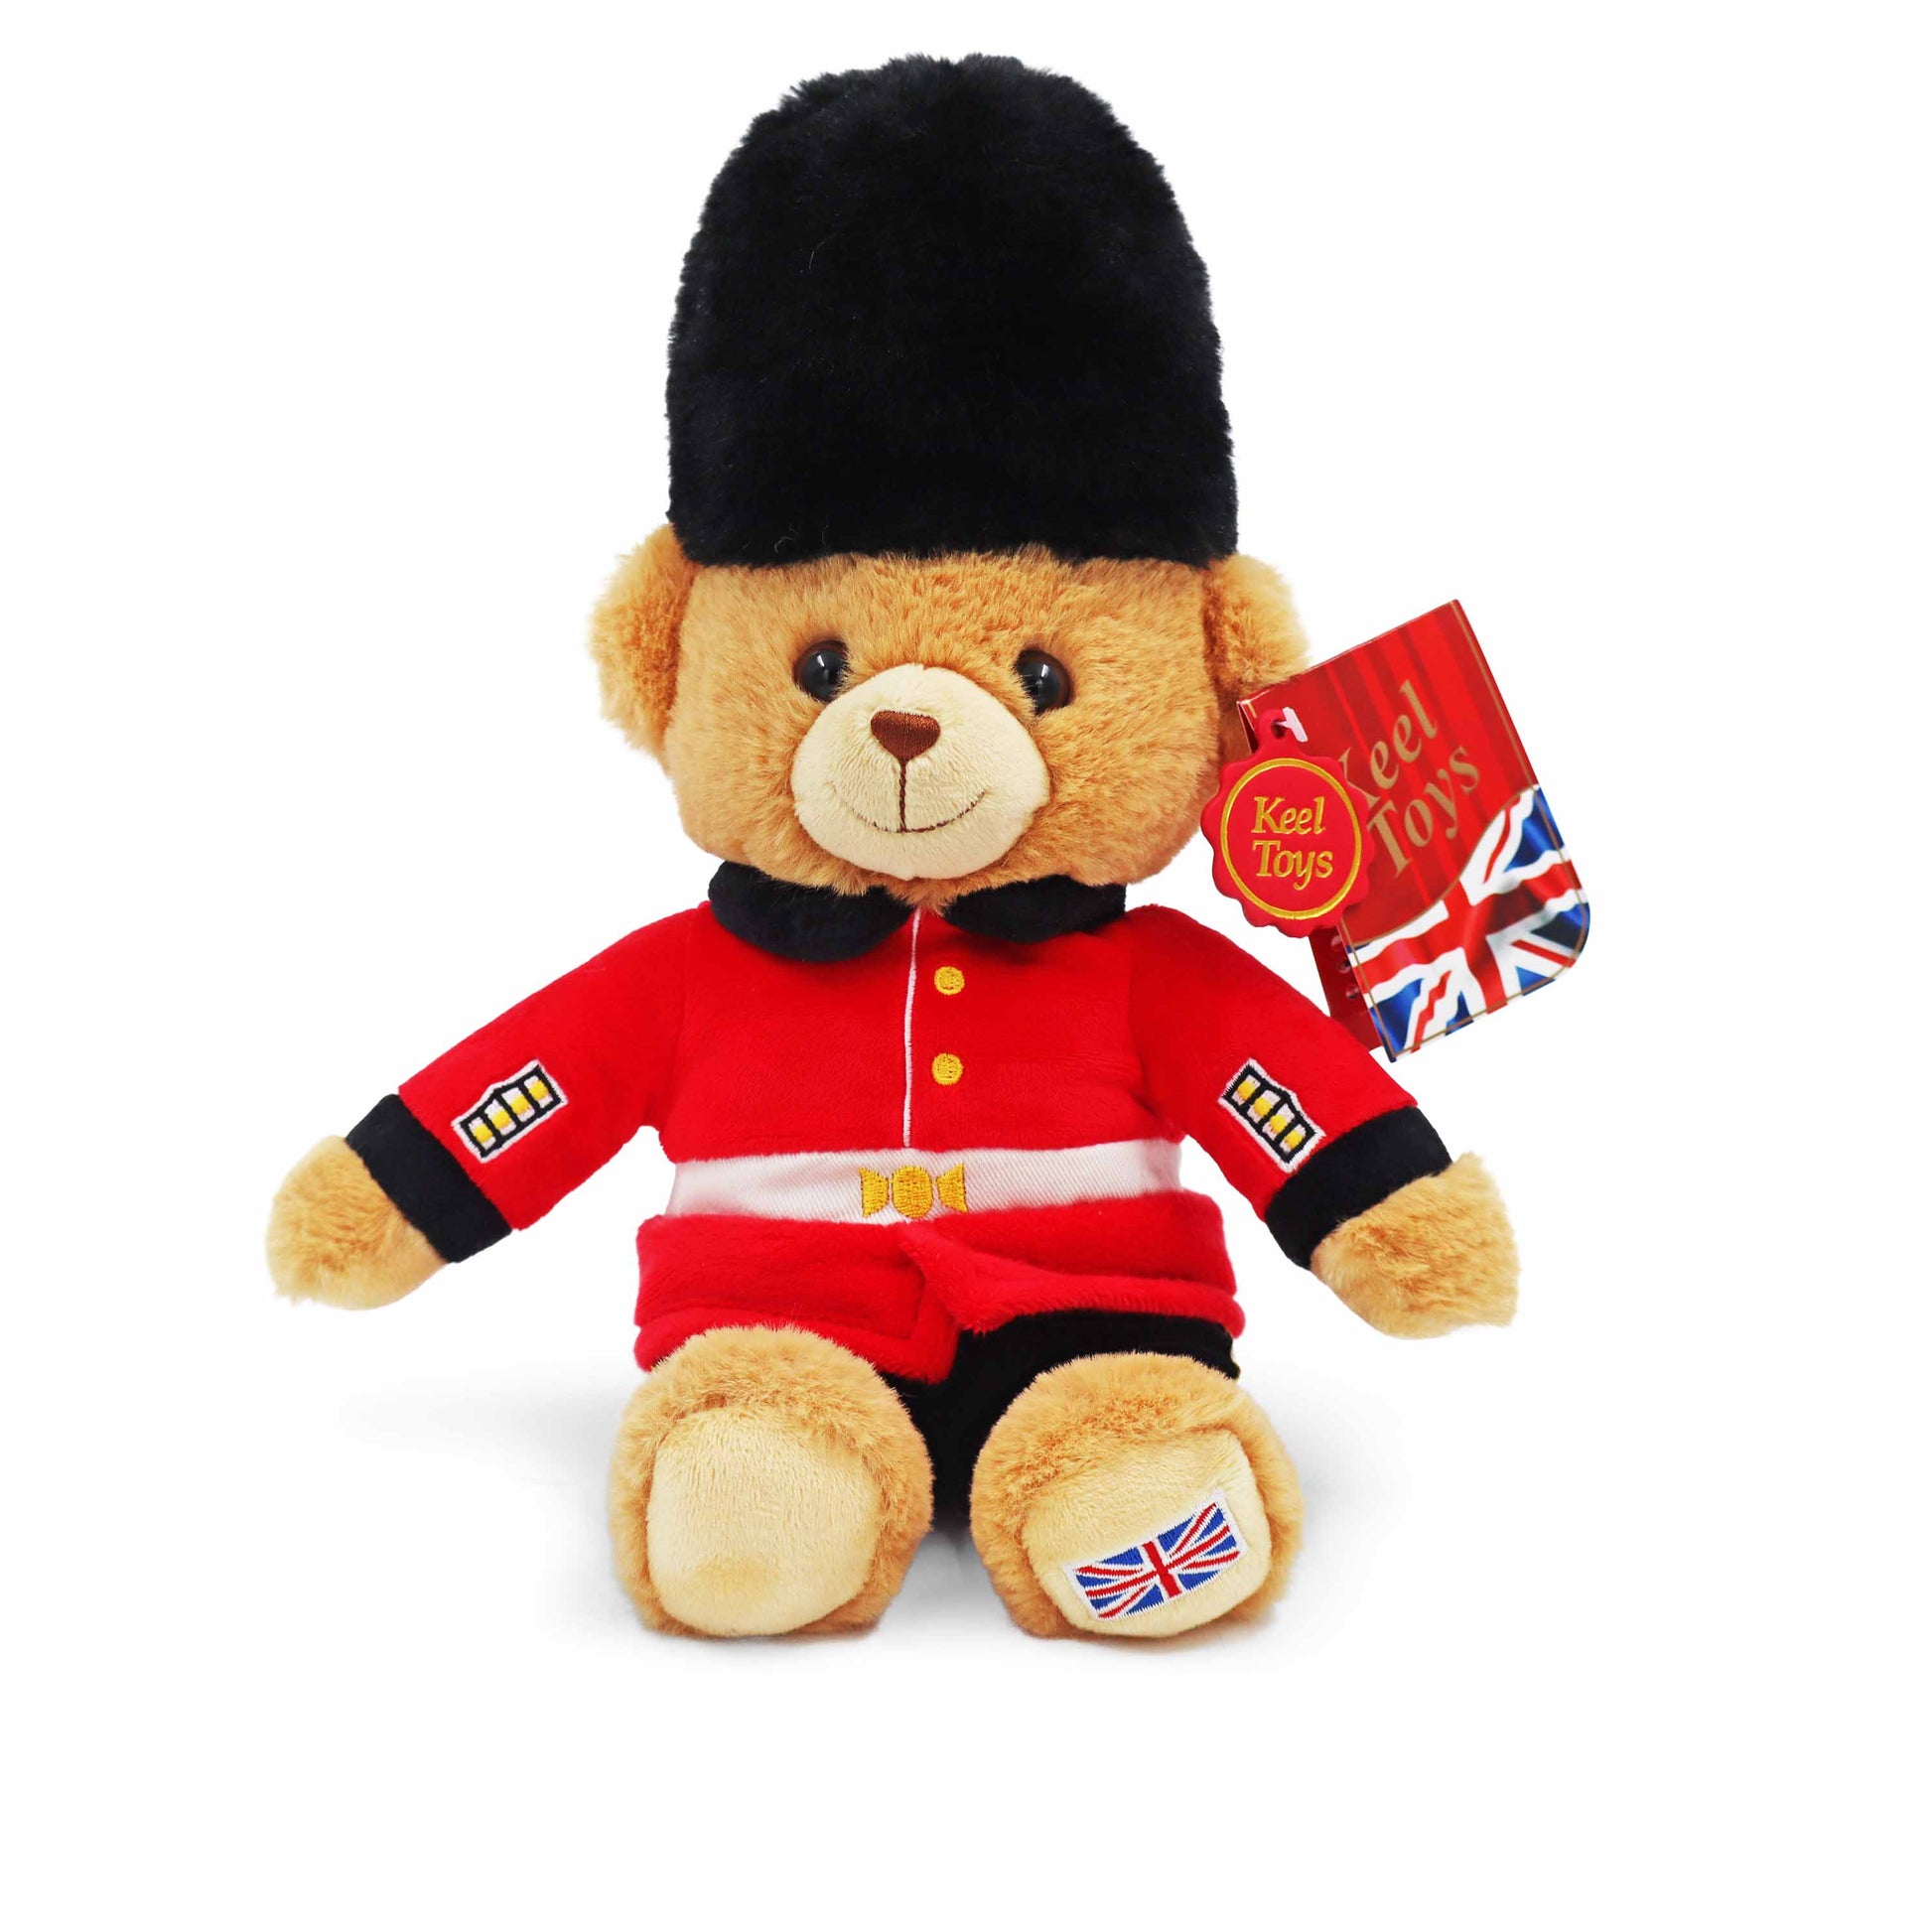 King Guardsman Teddy Bear - London Souvenir Teddy Bear